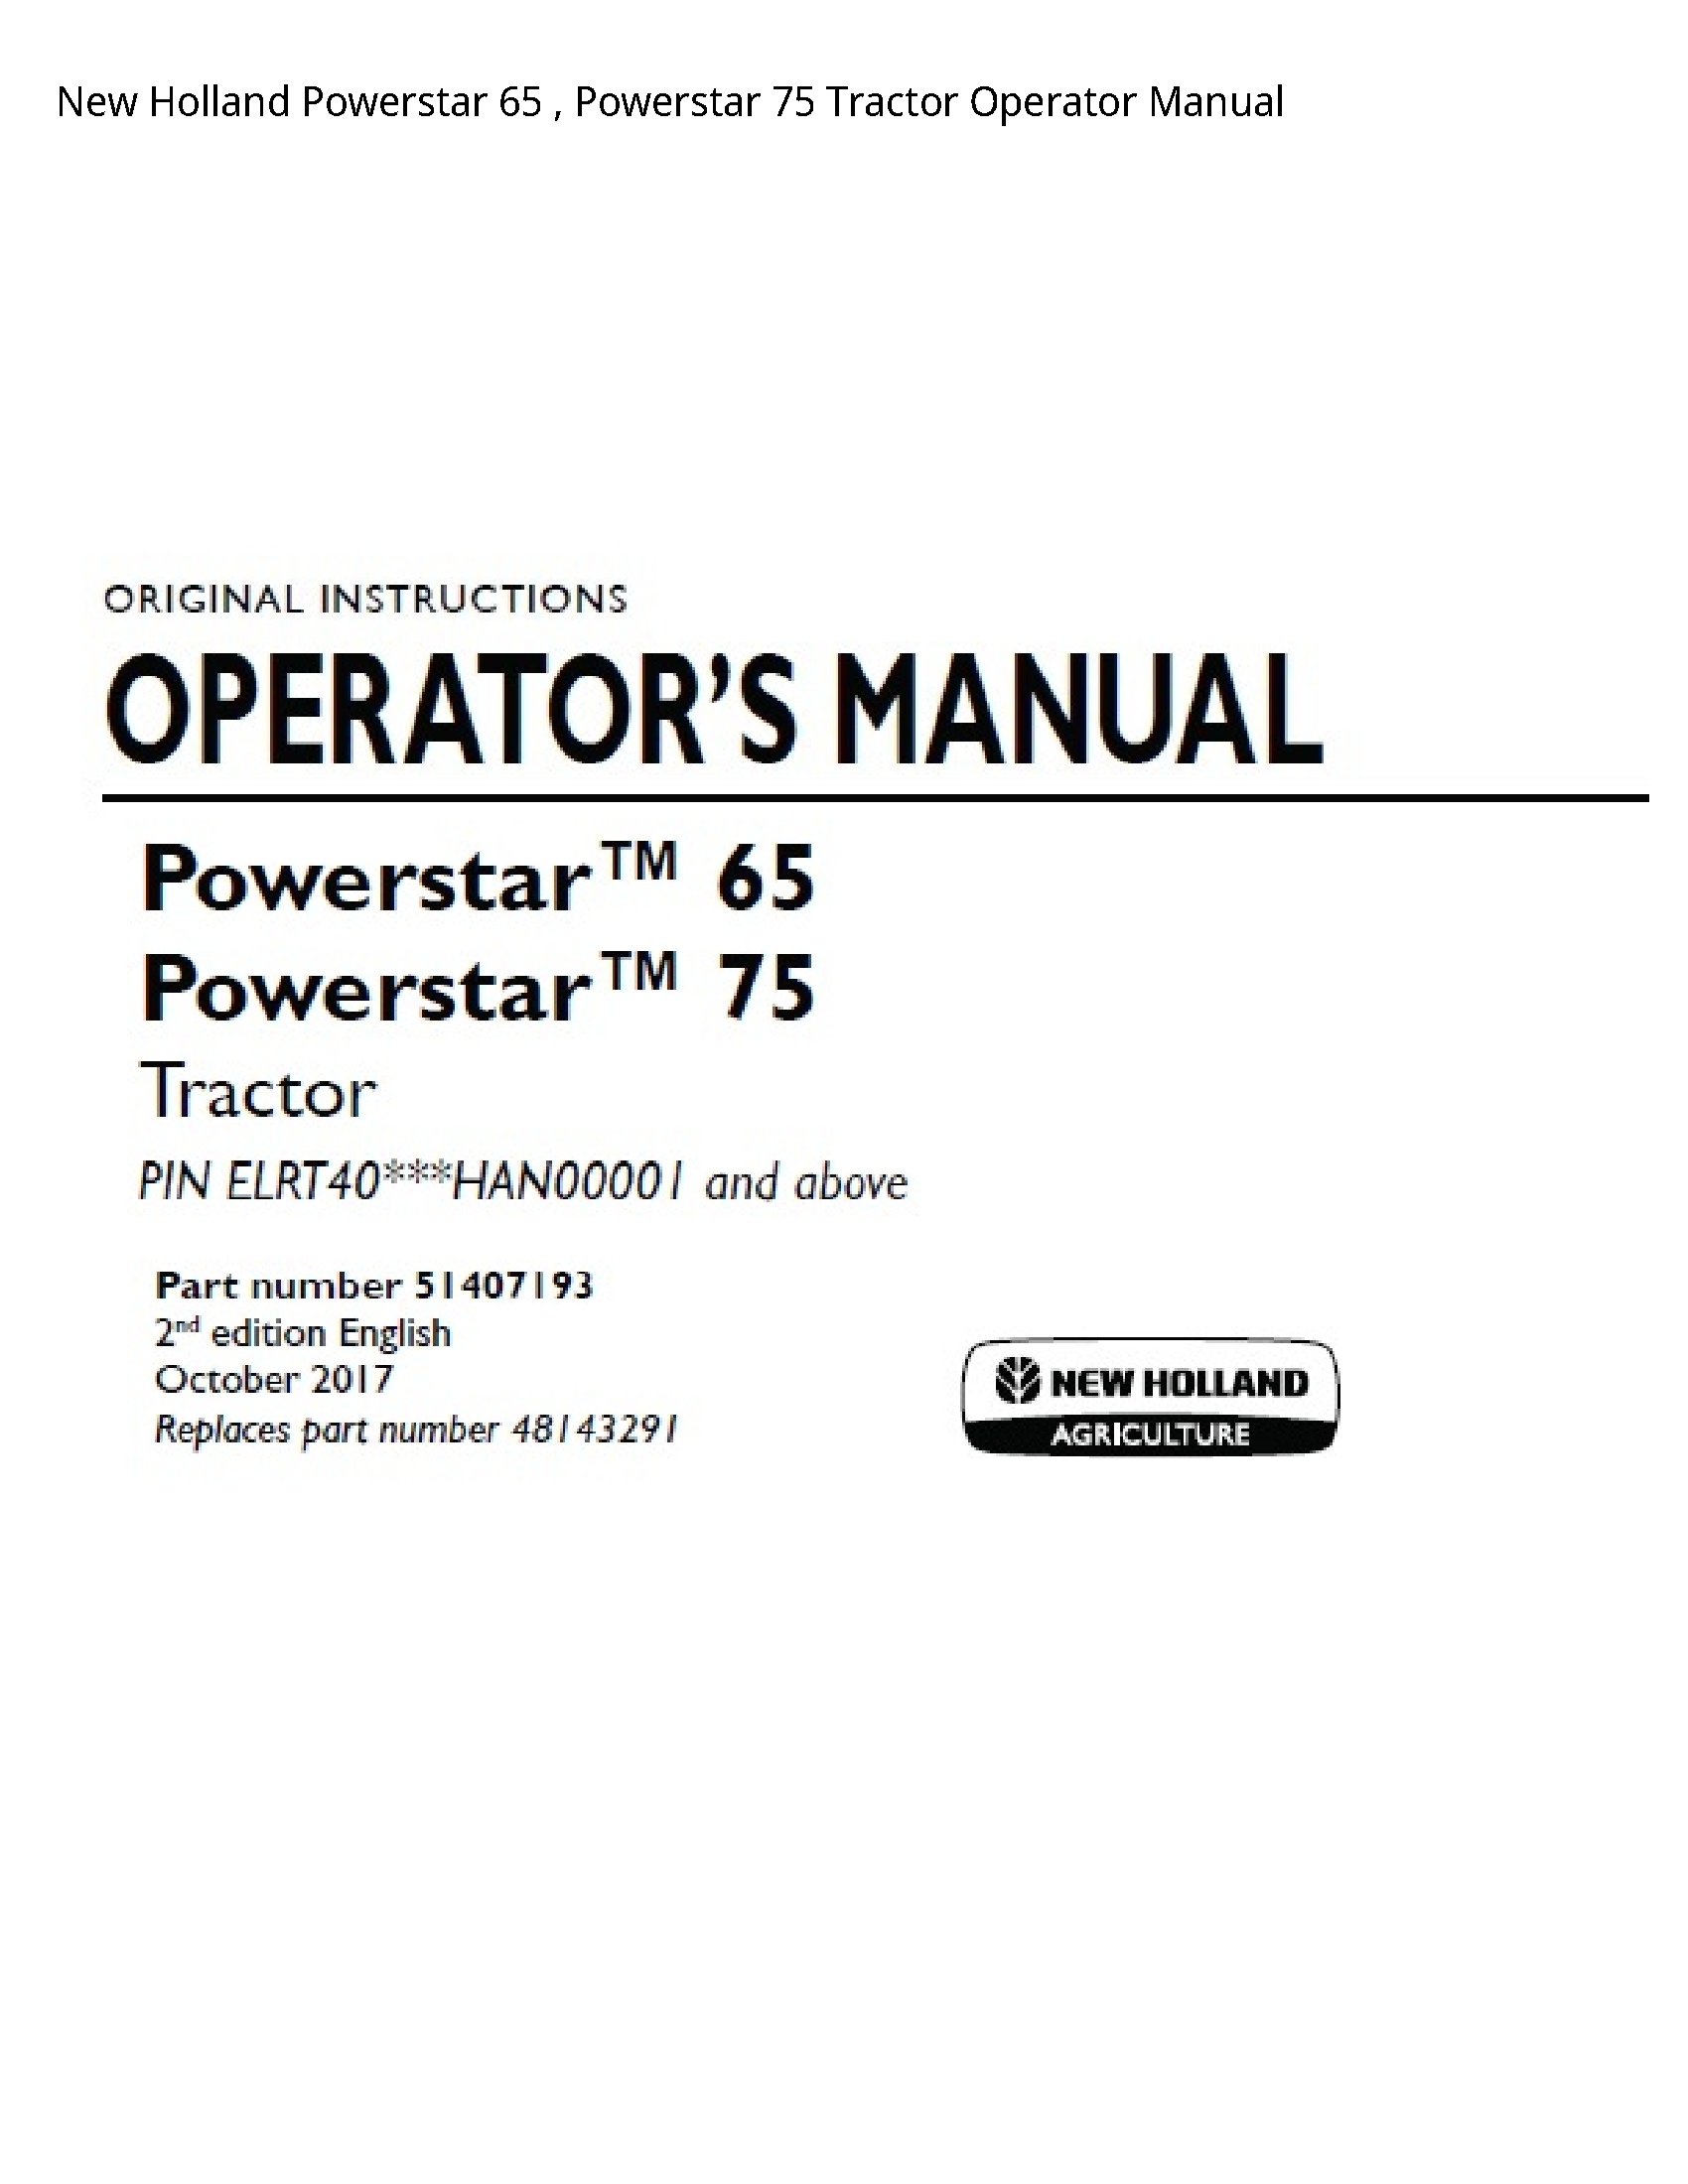 New Holland 65 Powerstar Powerstar Tractor Operator manual